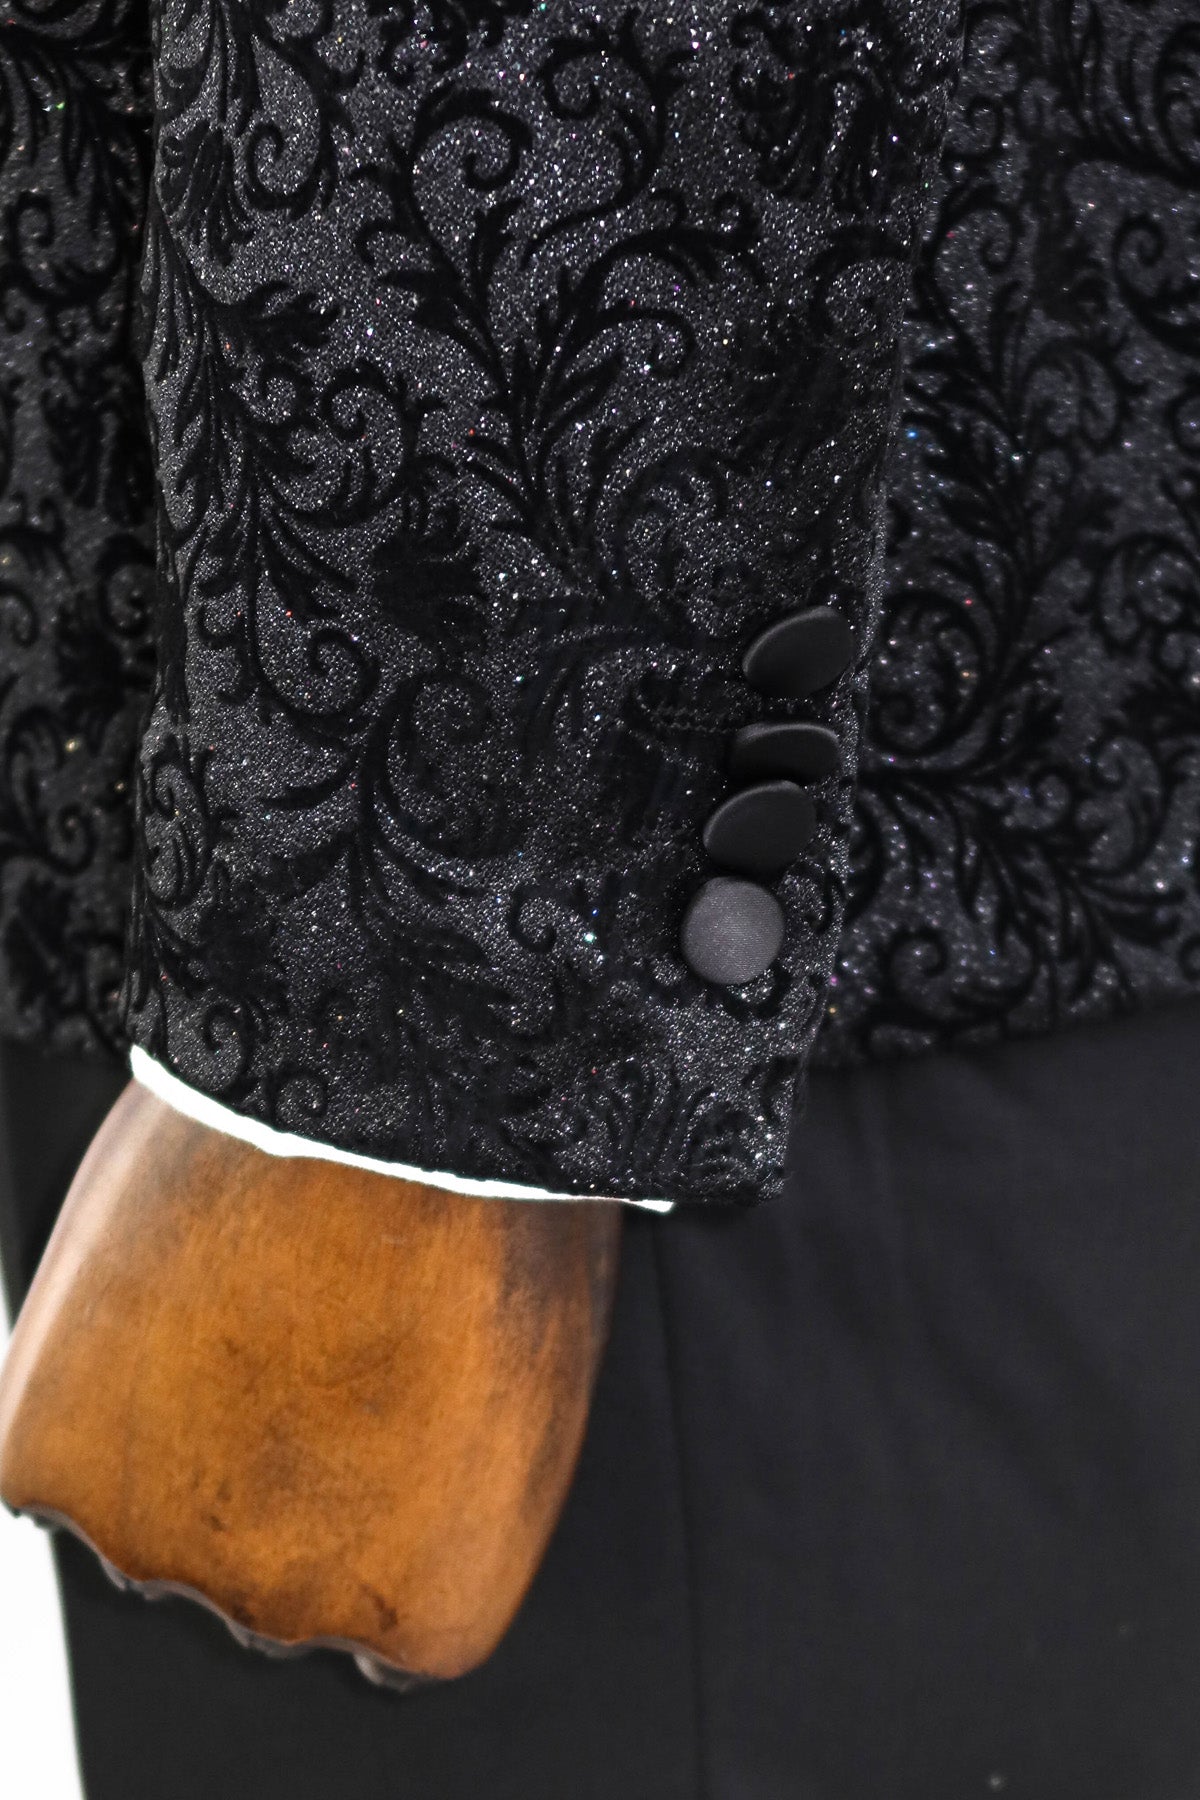 KCT Menswear Floral Sparkle Black Prom Blazer on hanger with floral sparkle black pattern